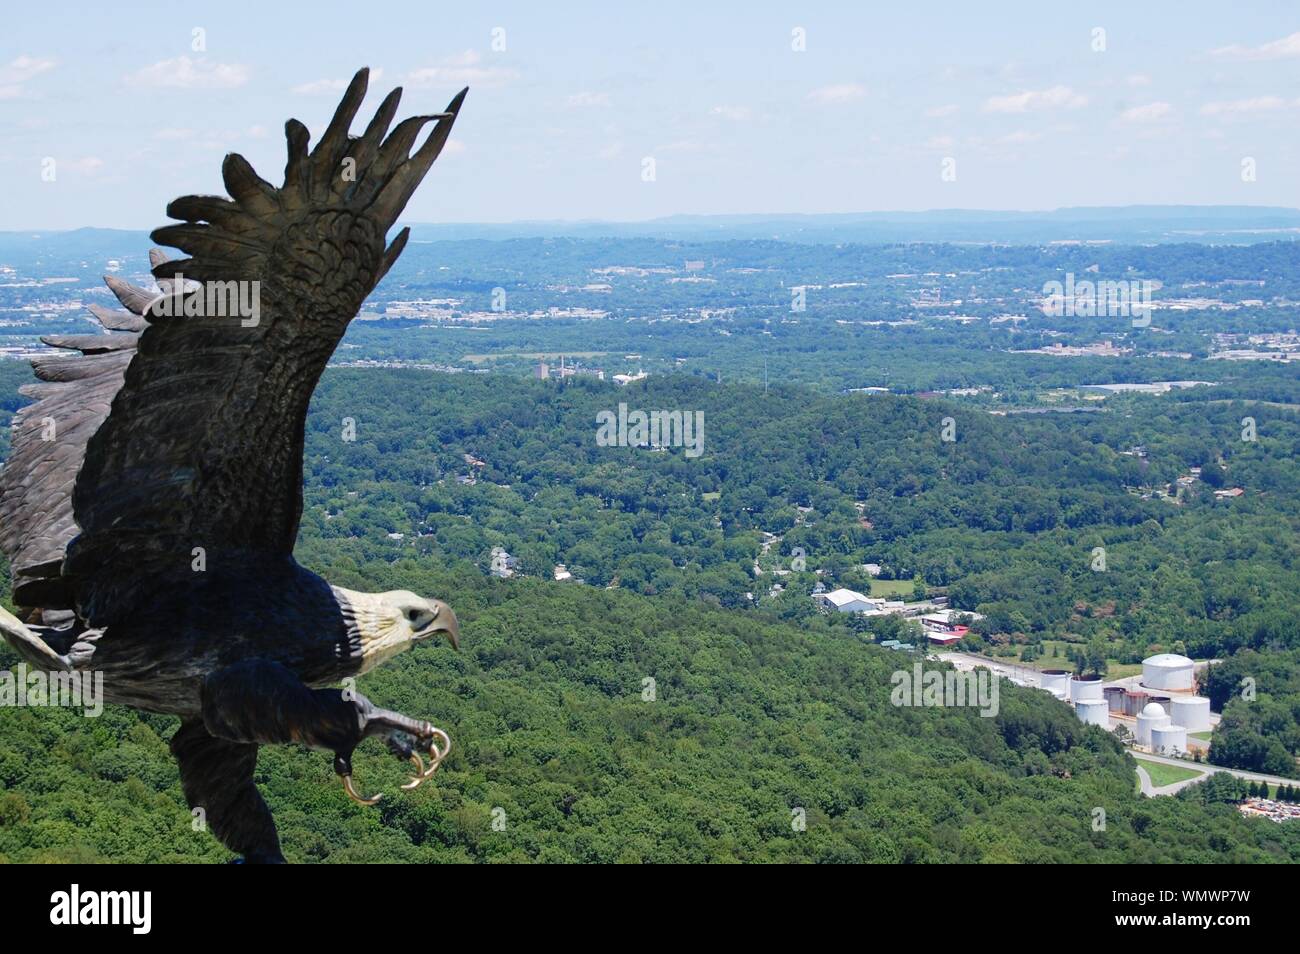 Eagle Statue Against Landscape Stock Photo